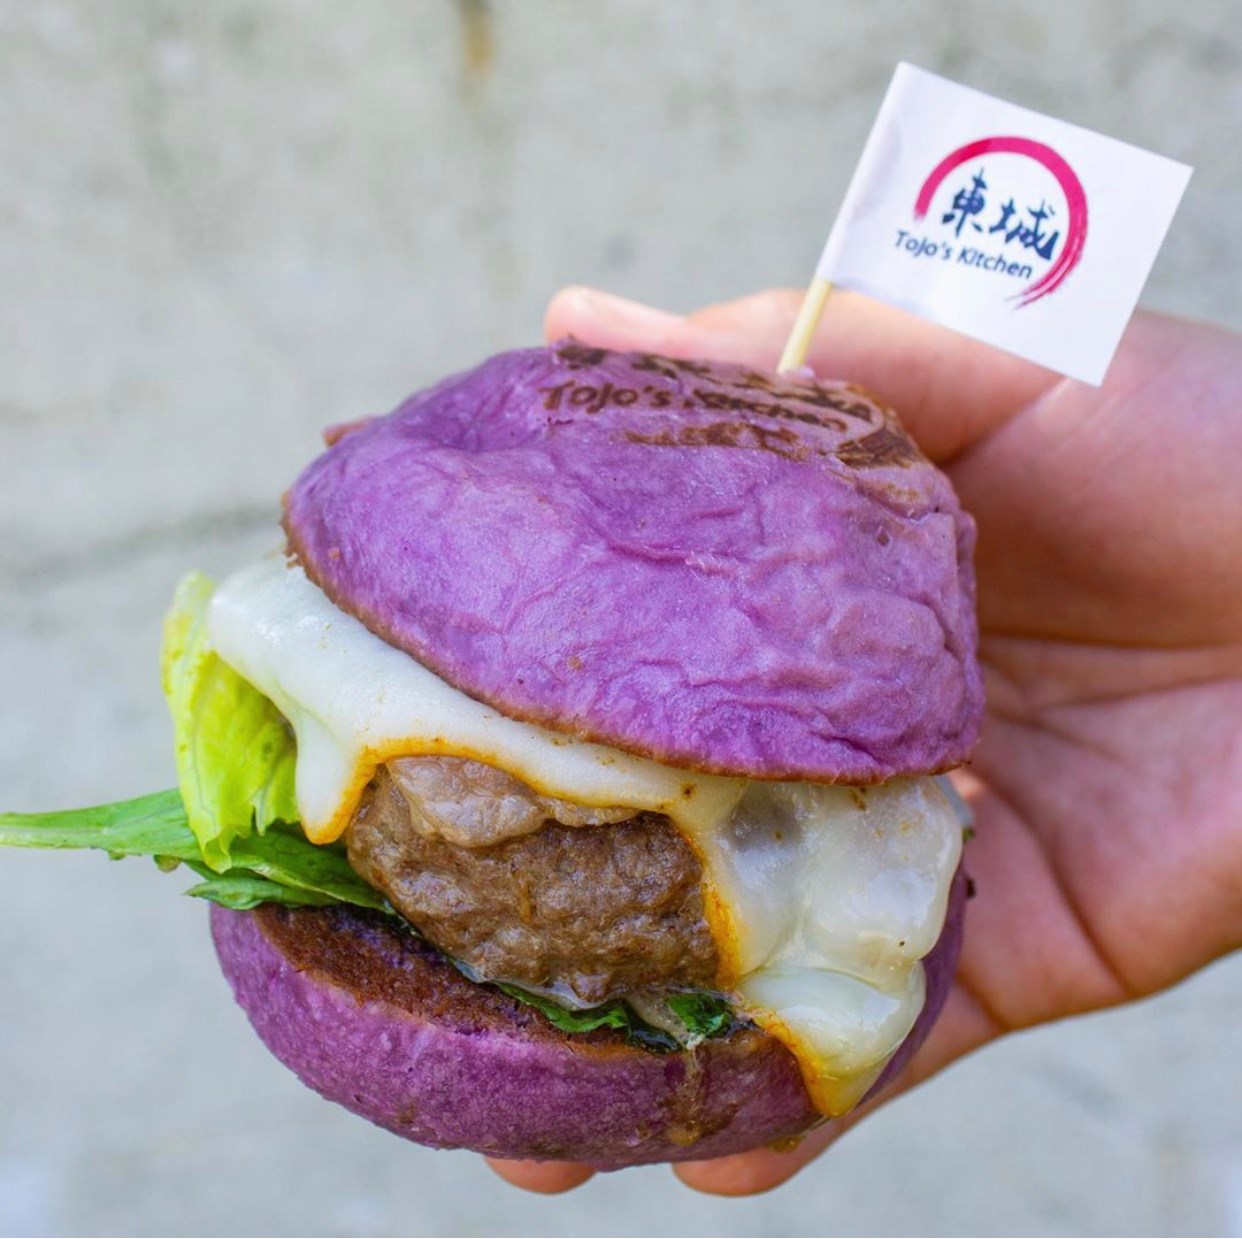 Person holding unique purple pattie hamburger